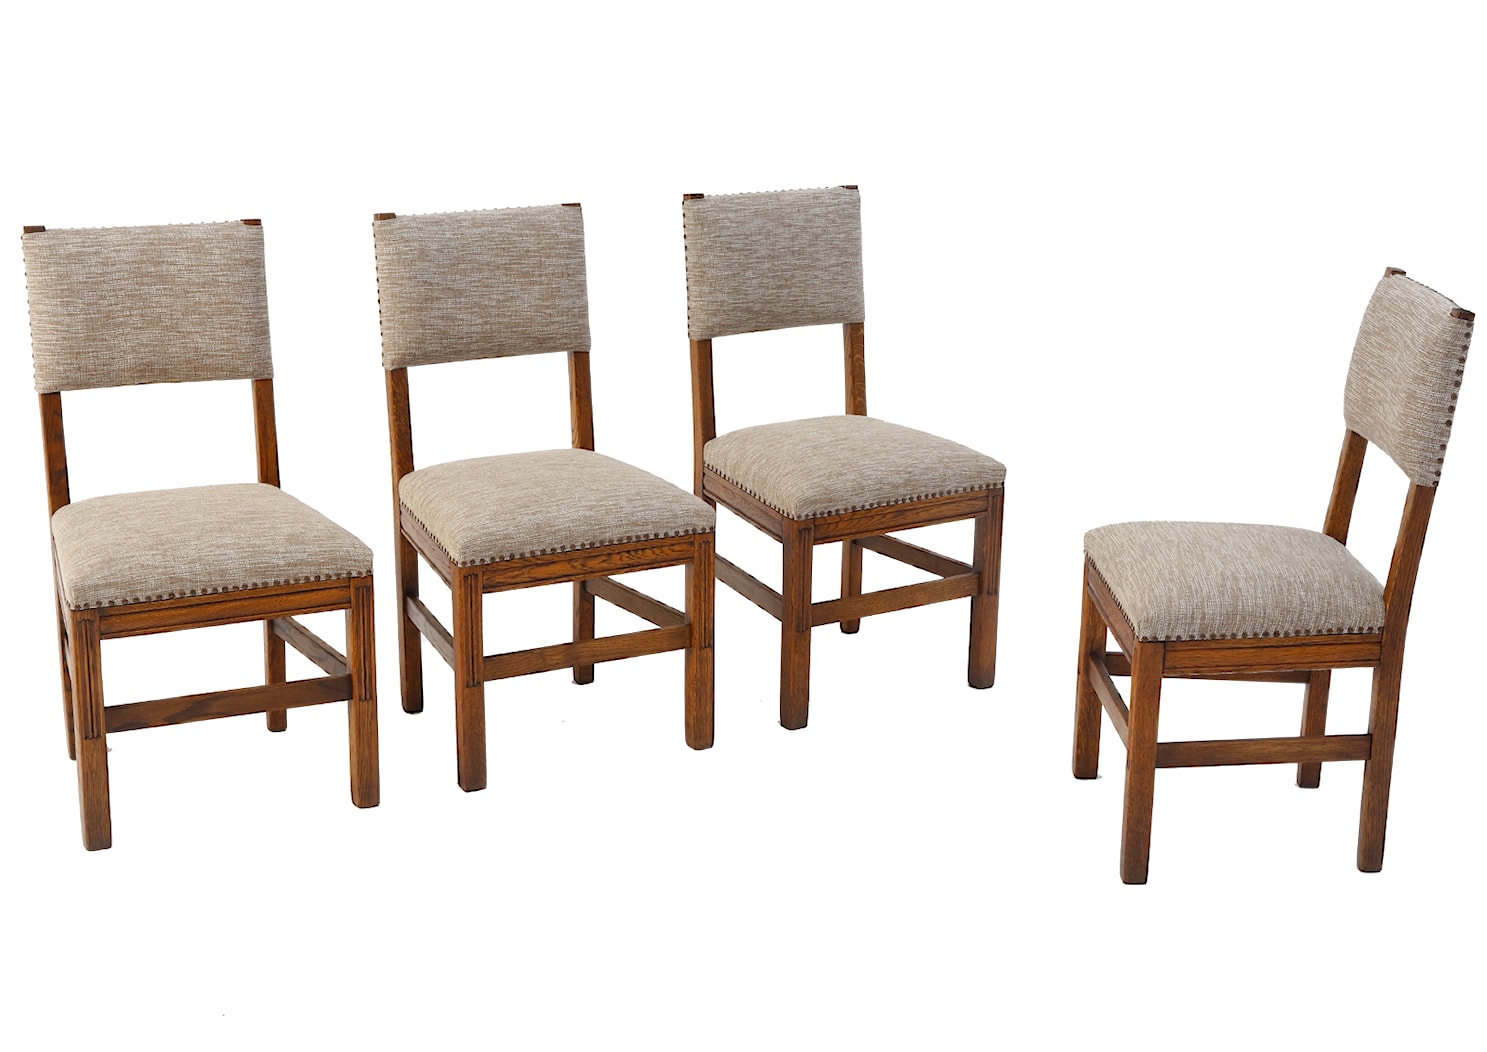 Komplet 4 holenderskich krzeseł z lat 60. - zdjęcie od Fryderyk Danielczyk STORE - Homebook